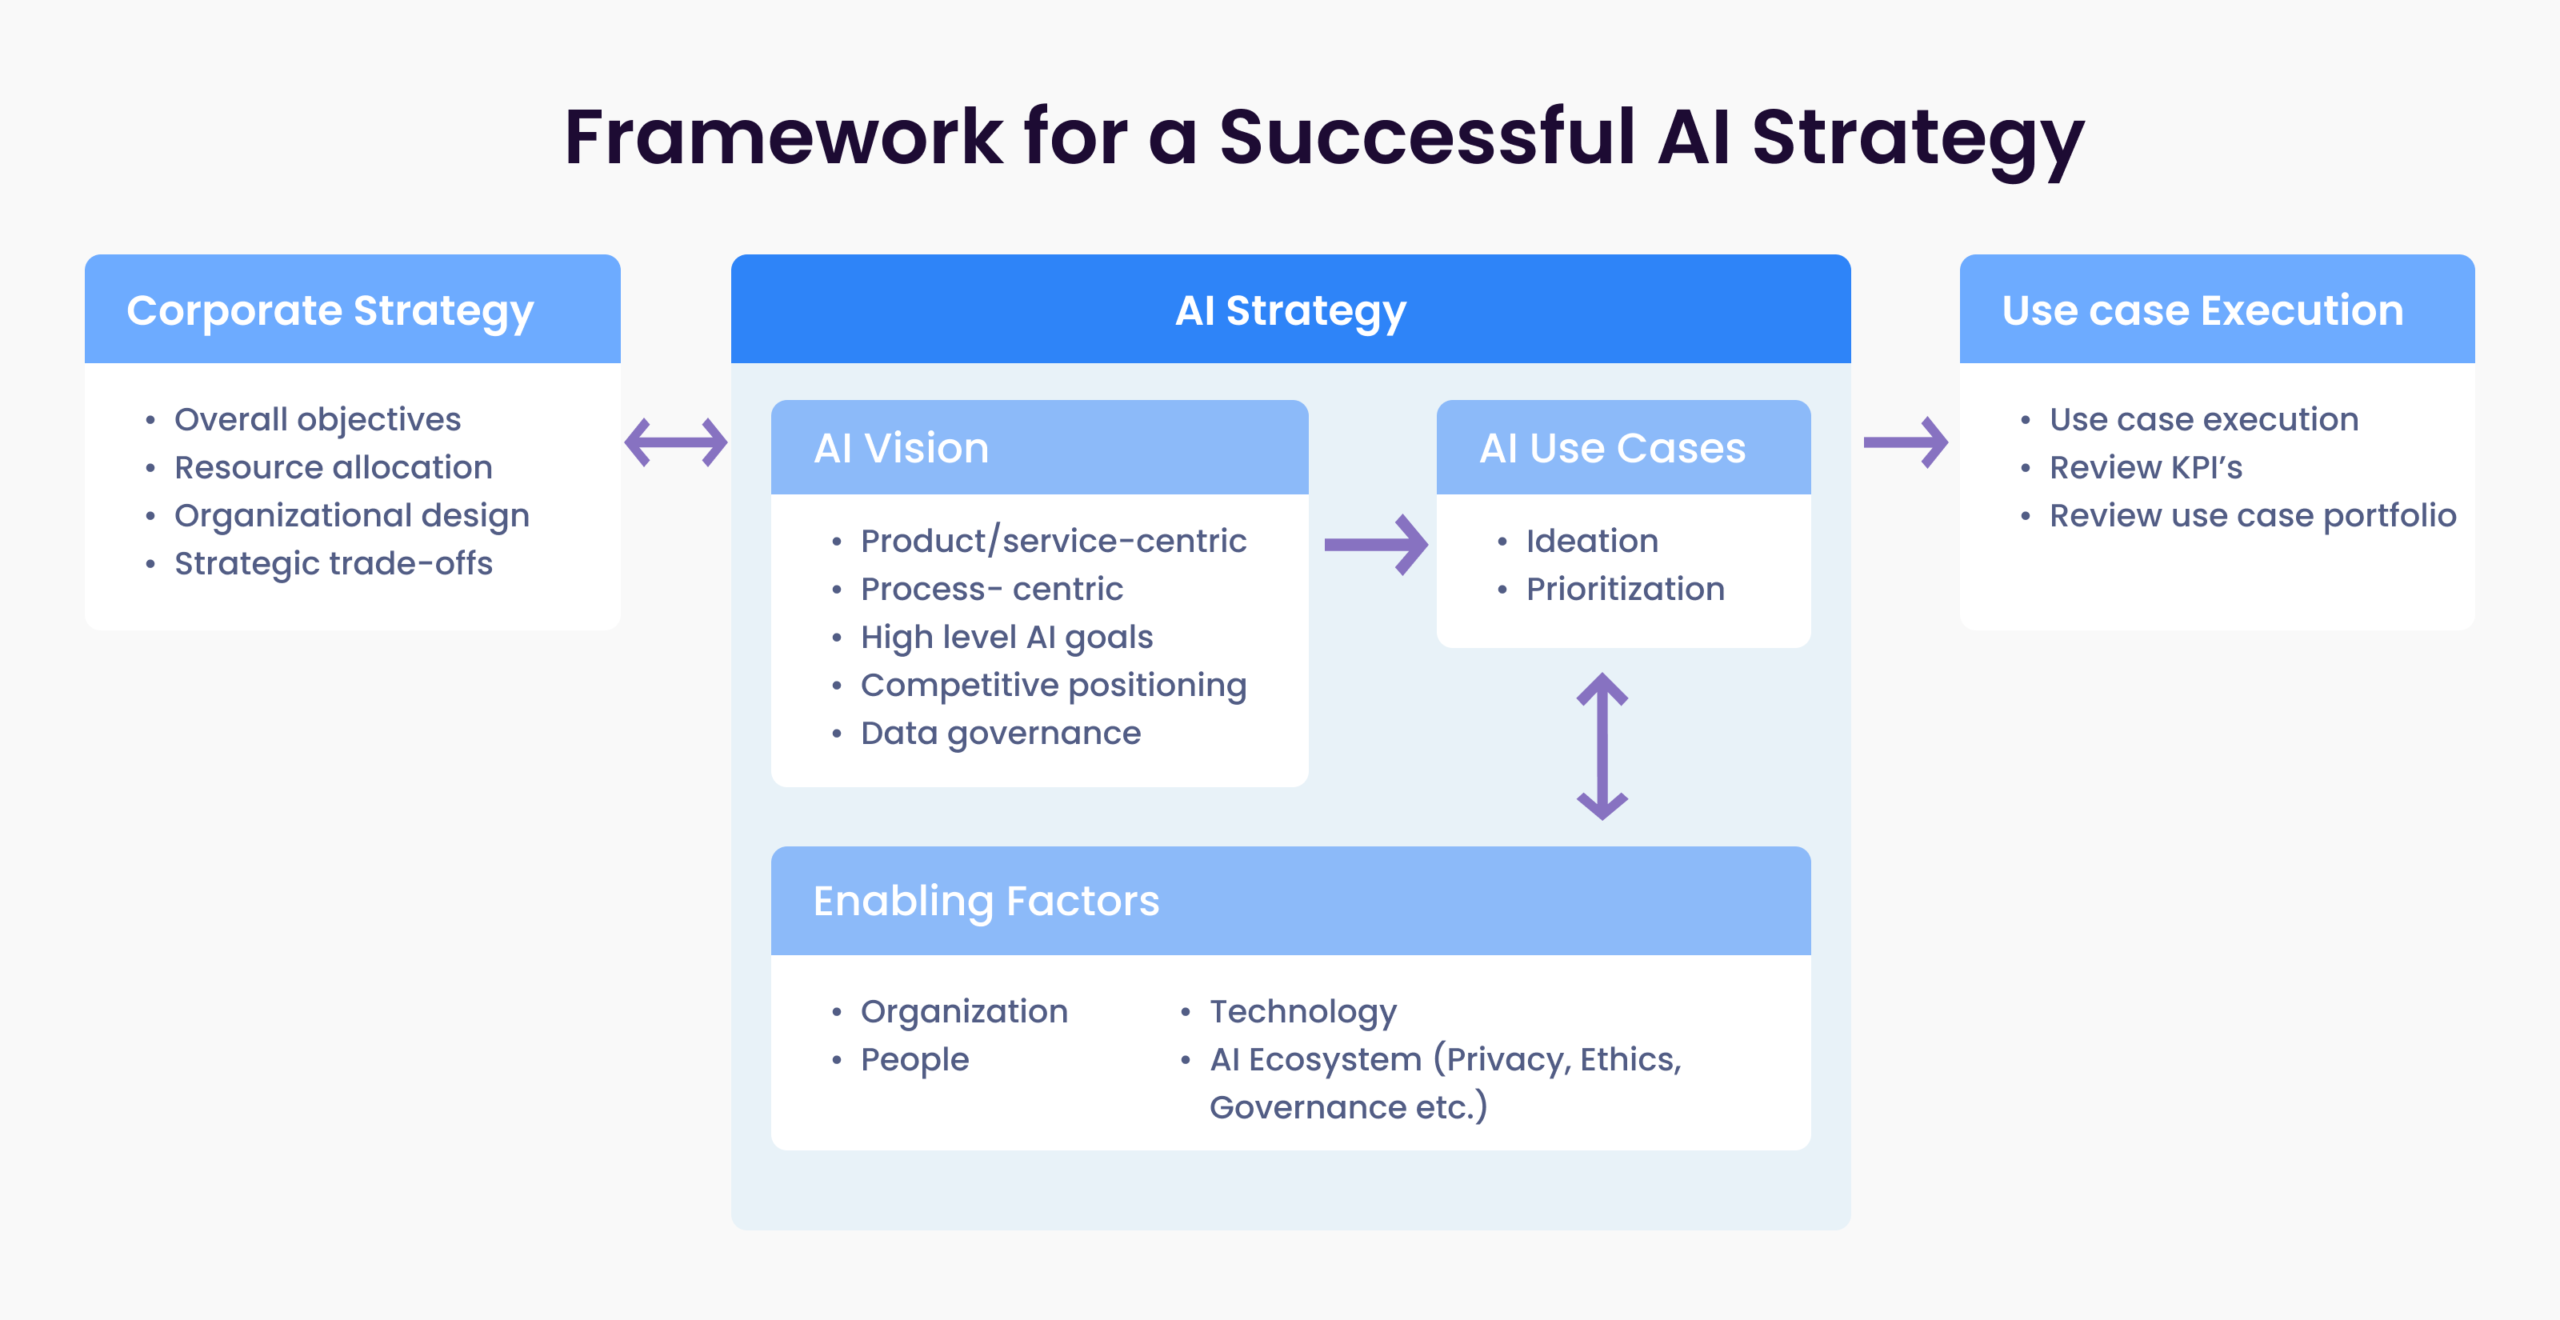 Building a Successful AI Strategy